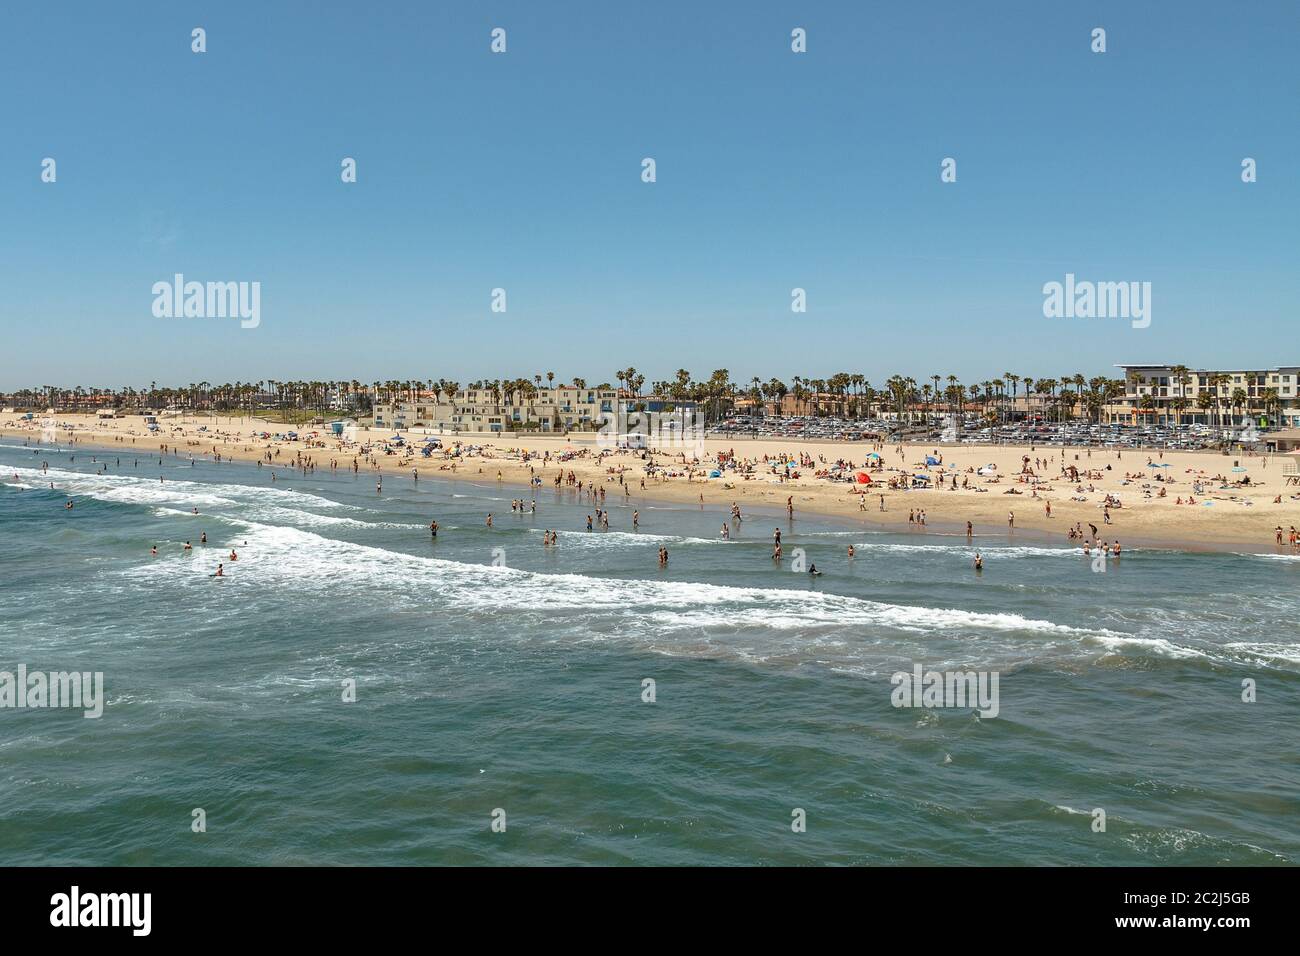 People enjoying a summer day at Huntington Beach Stock Photo